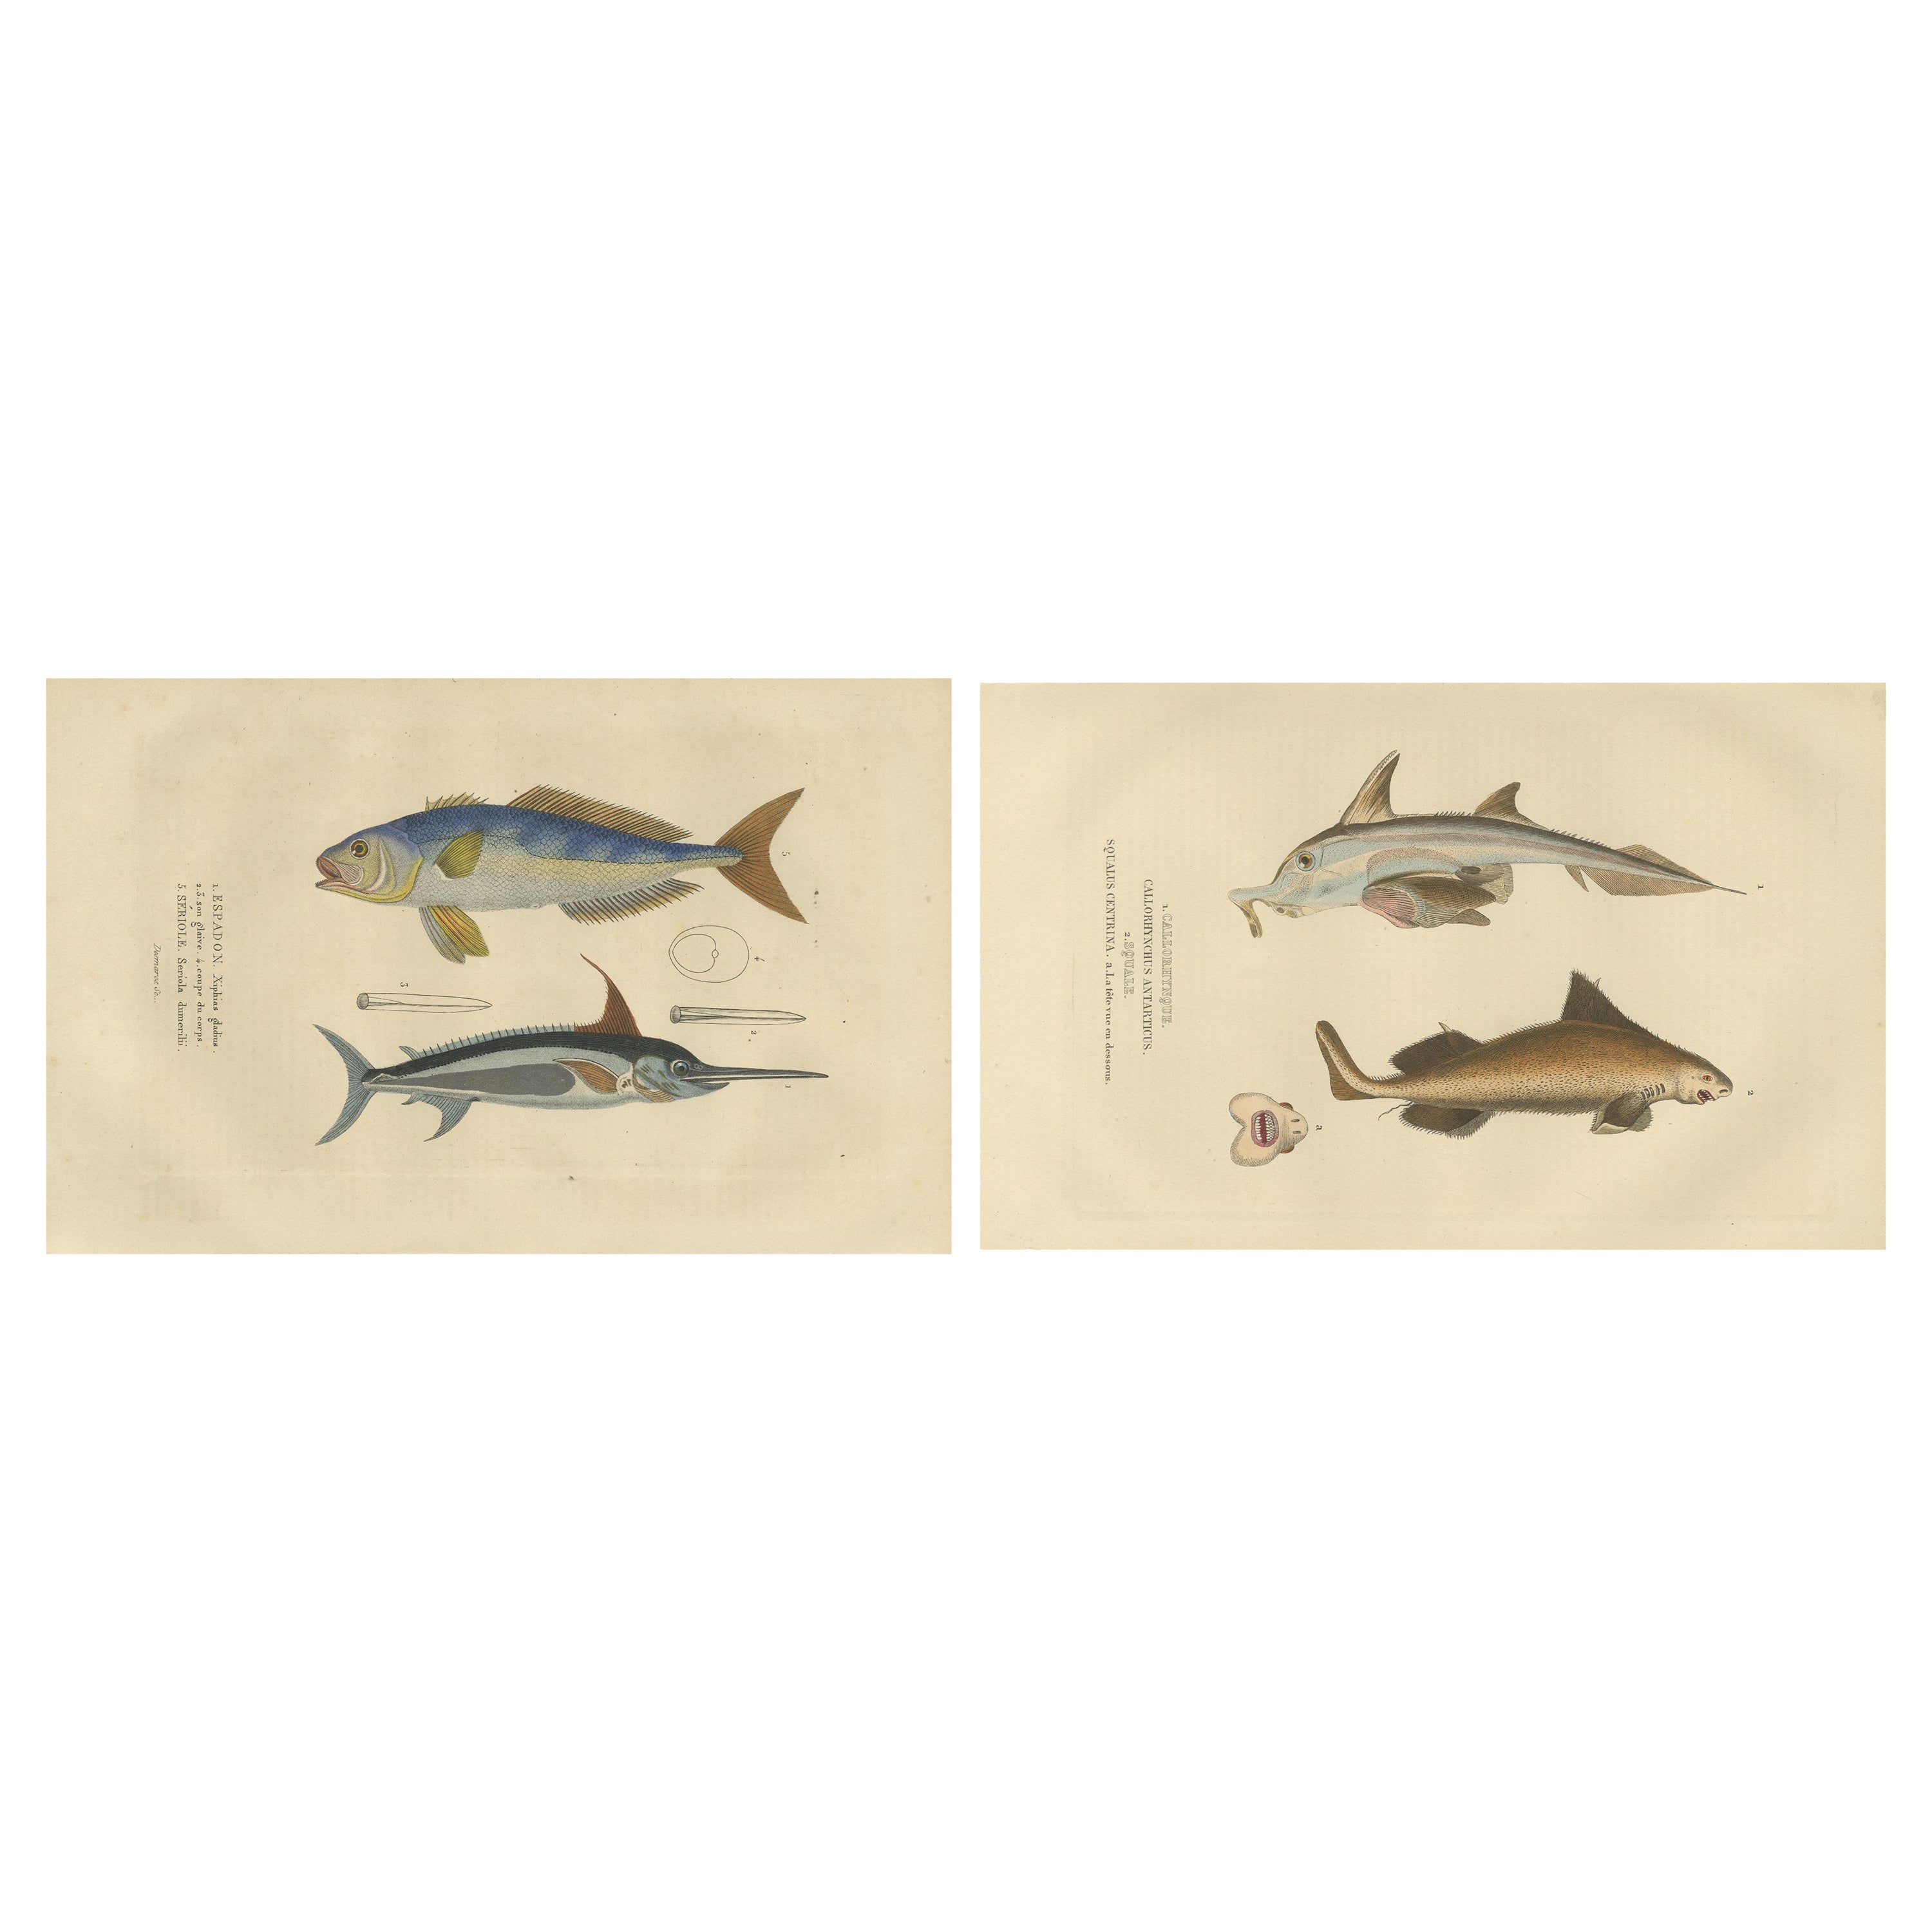 Marine Majesty: Swordfish & Sealife Engravings in Old Handcoloring, 1845 For Sale